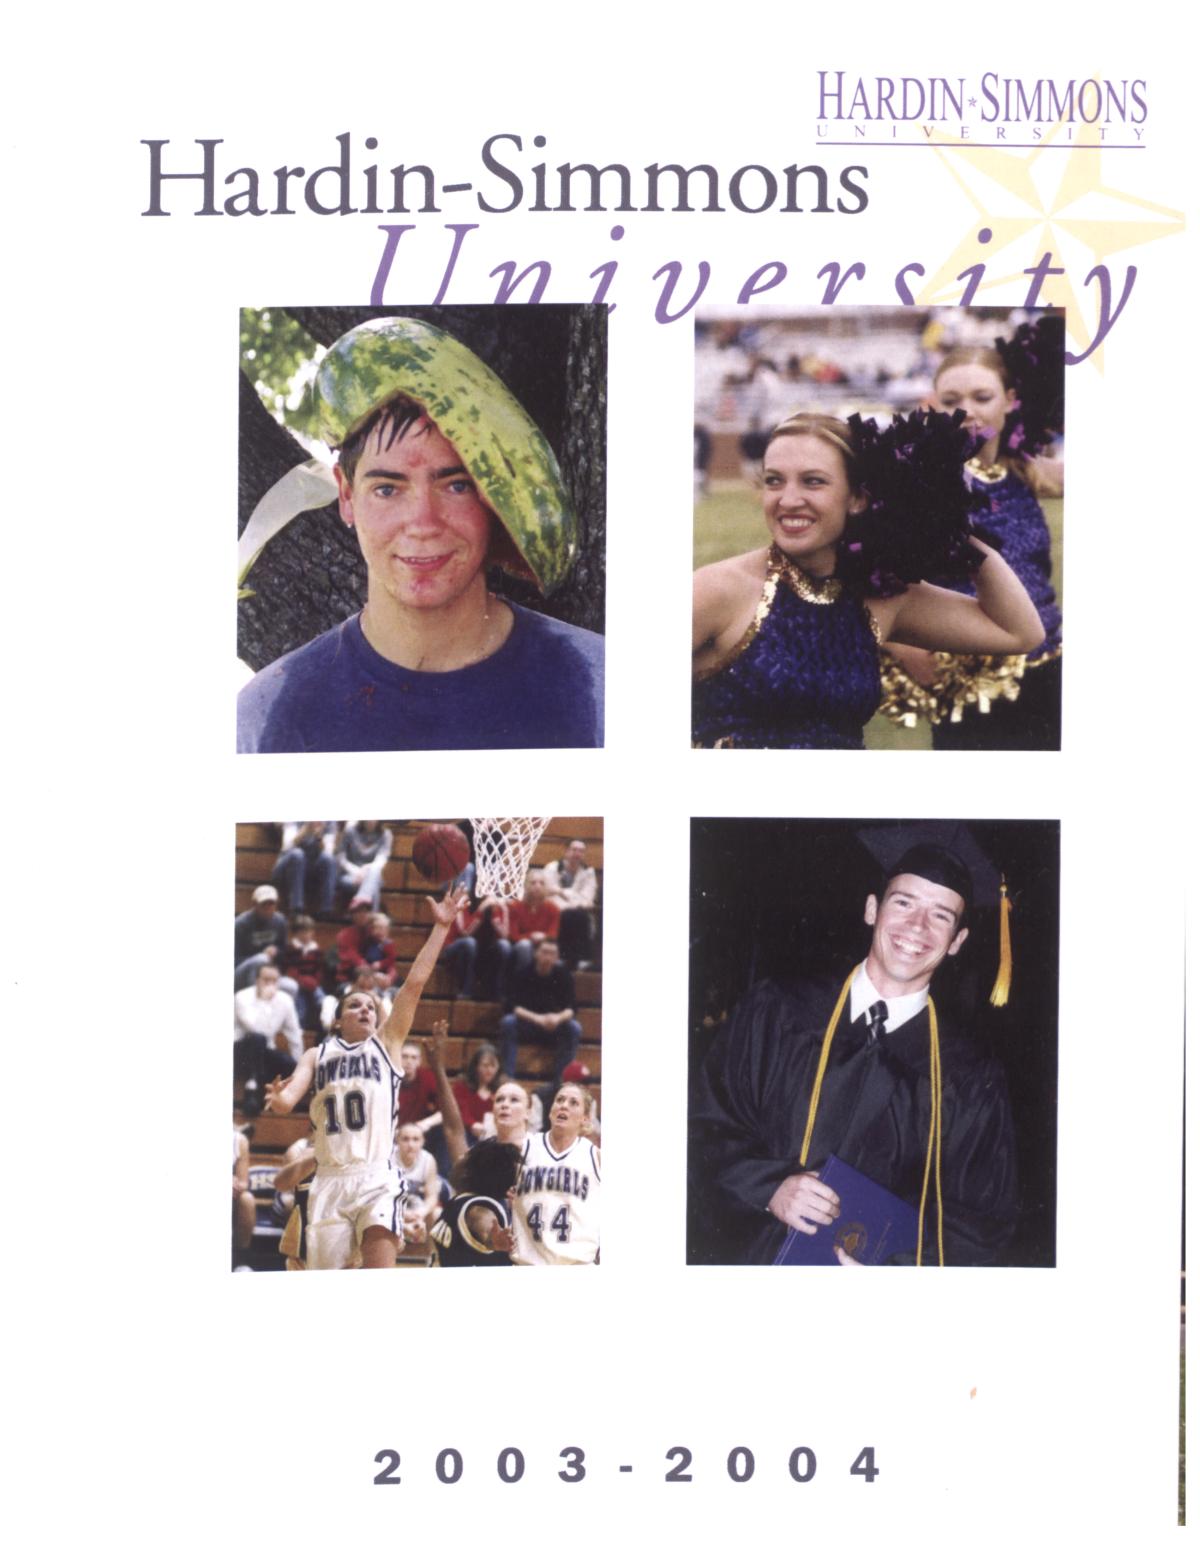 The Bronco, Yearbook of Hardin-Simmons University, 2004
                                                
                                                    None
                                                